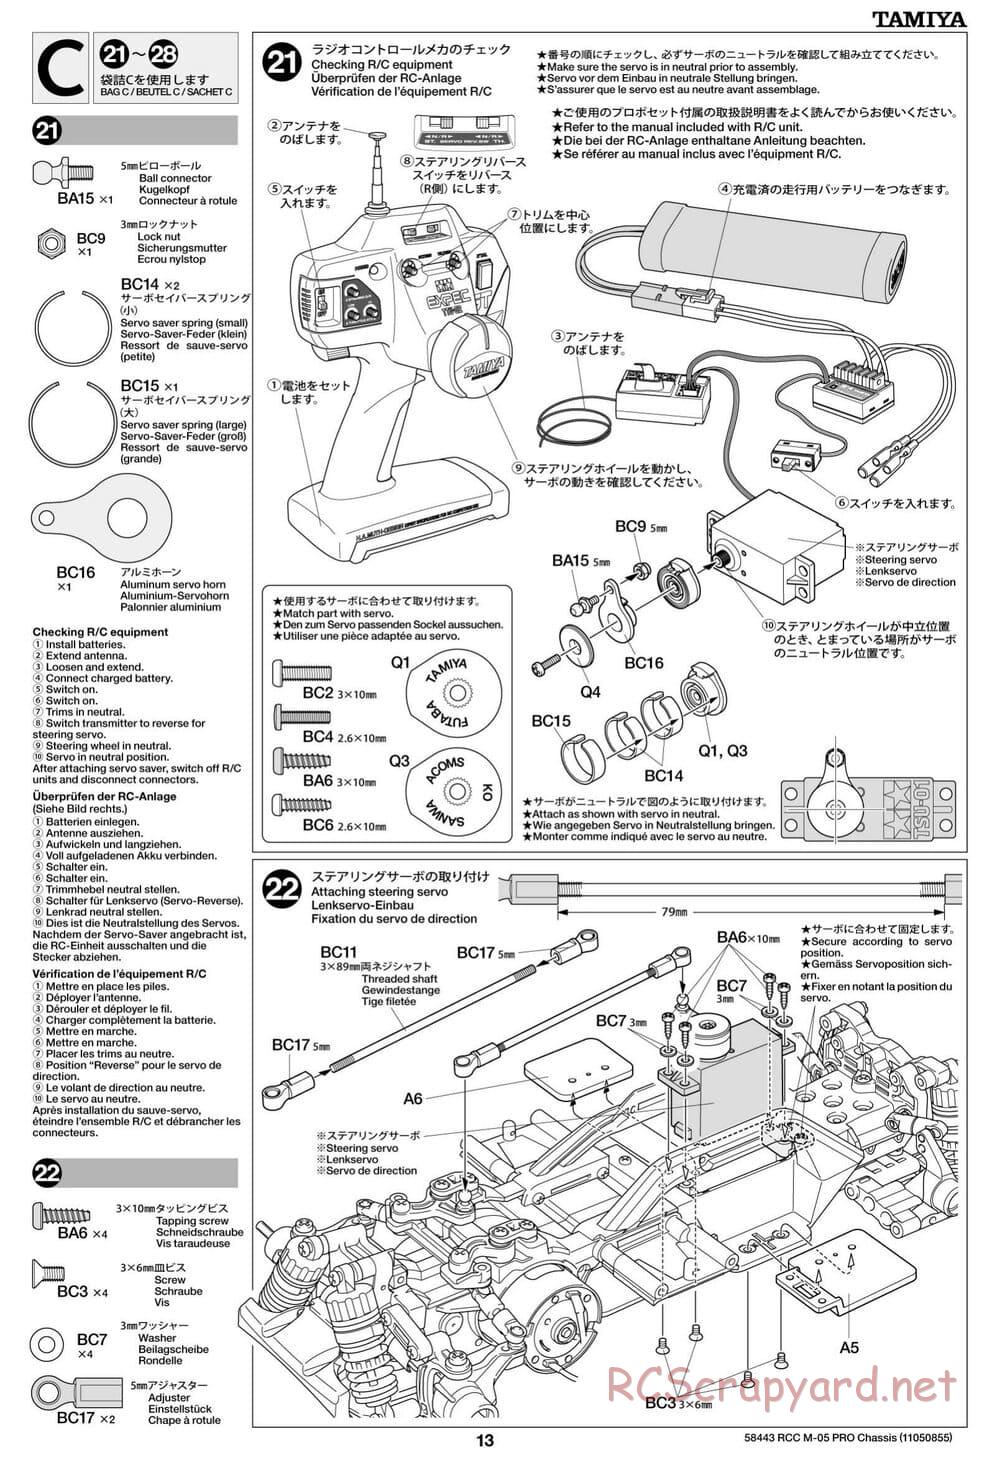 Tamiya - M05-Pro Chassis - Manual - Page 13